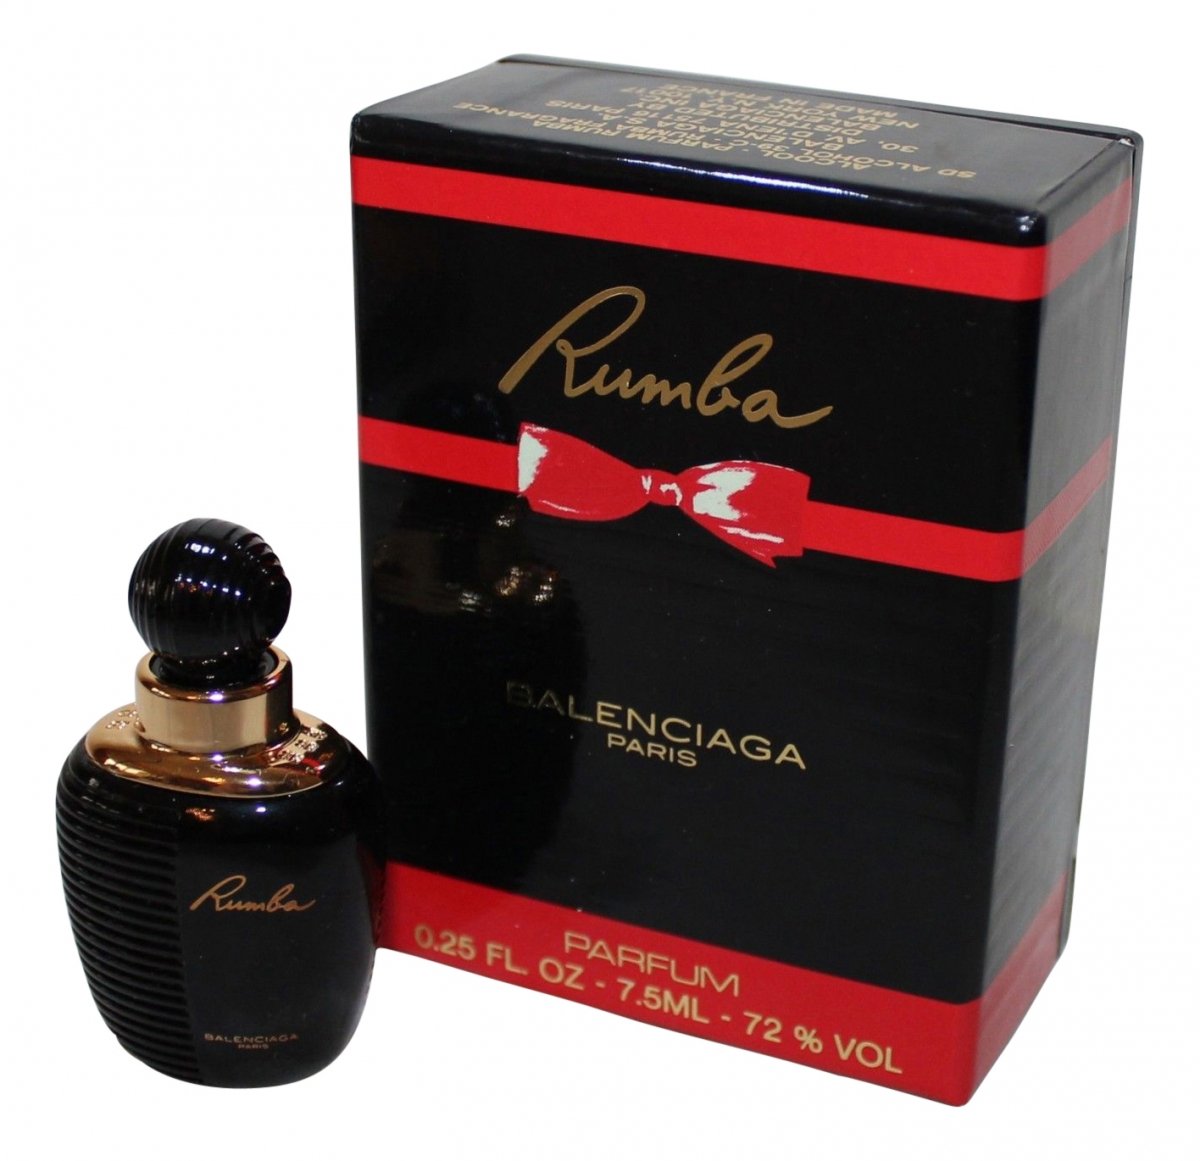 rumba perfume by balenciaga